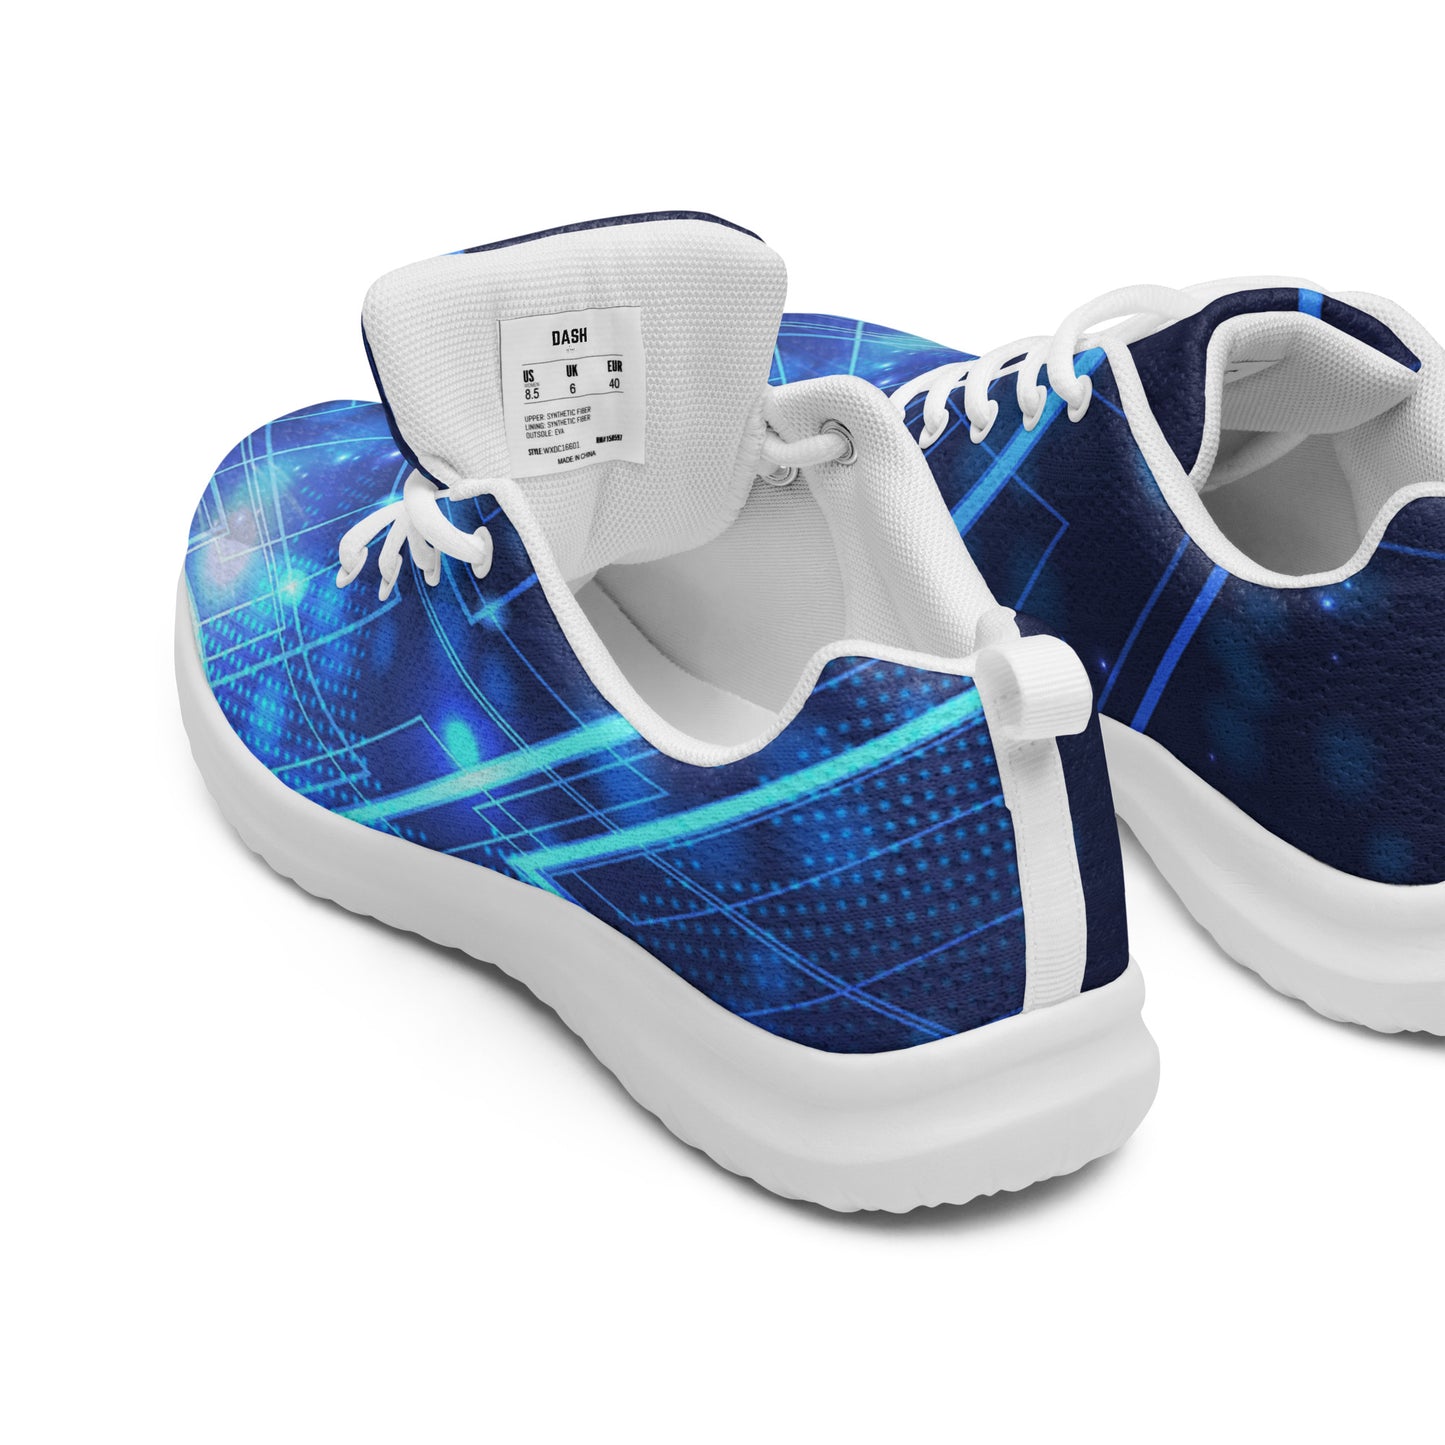 DASH Blue Circuit Women’s Athletic Shoes Lightweight Breathable Design by IOBI Original Apparel